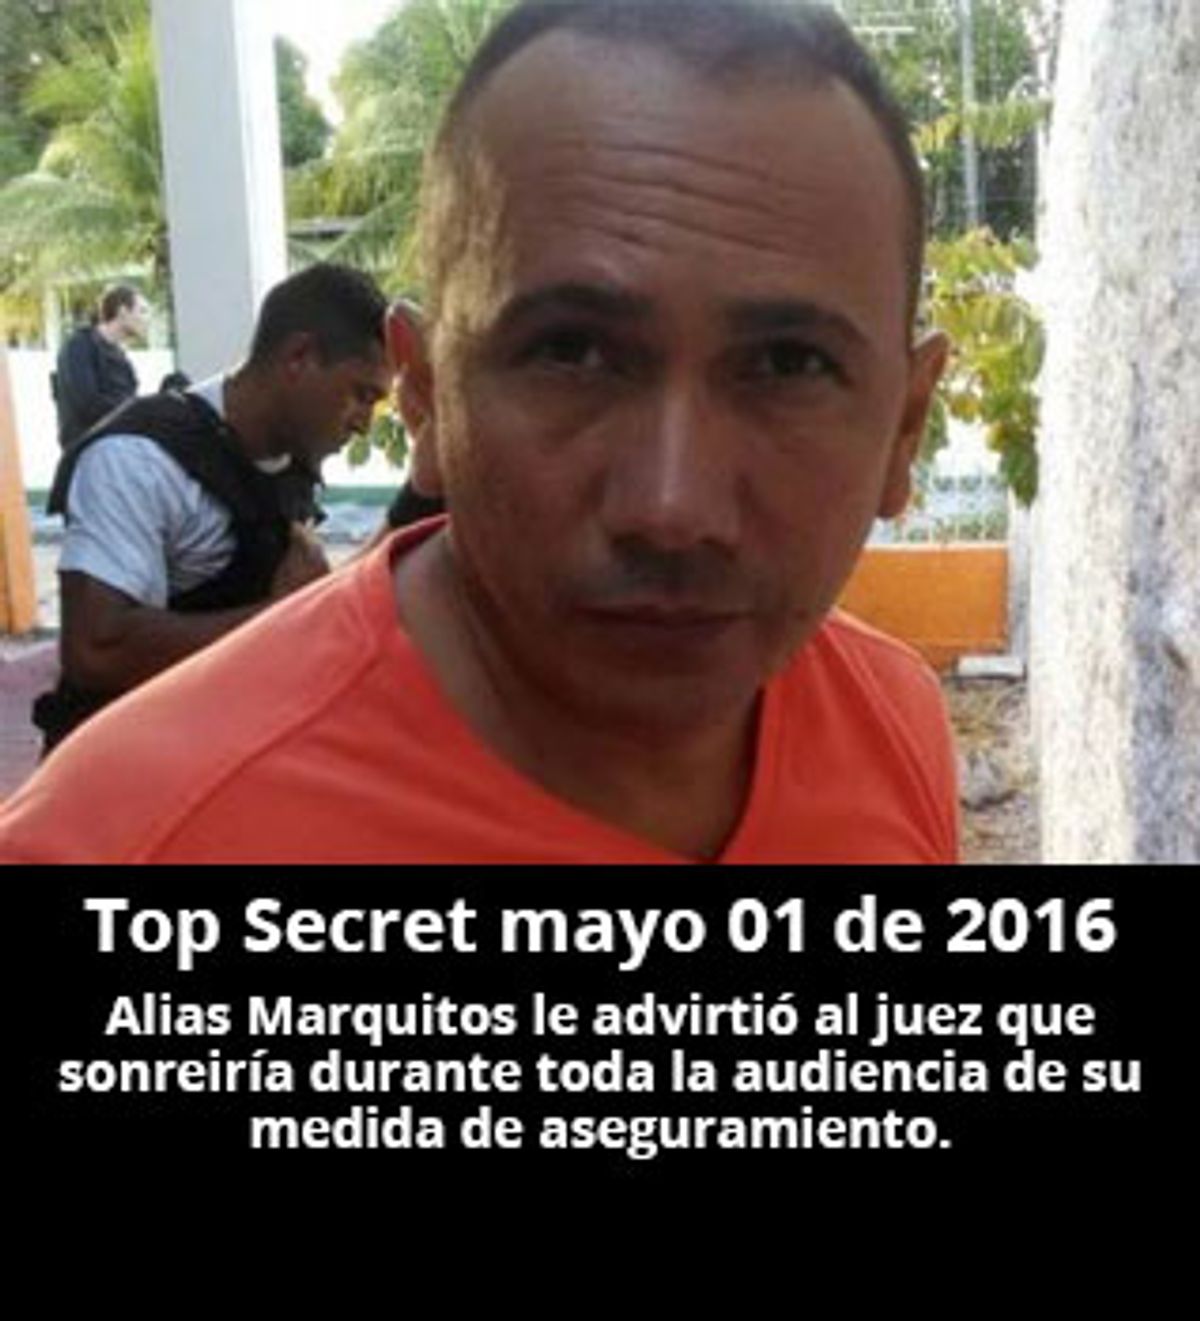 Top Secret mayo 01 de 2016